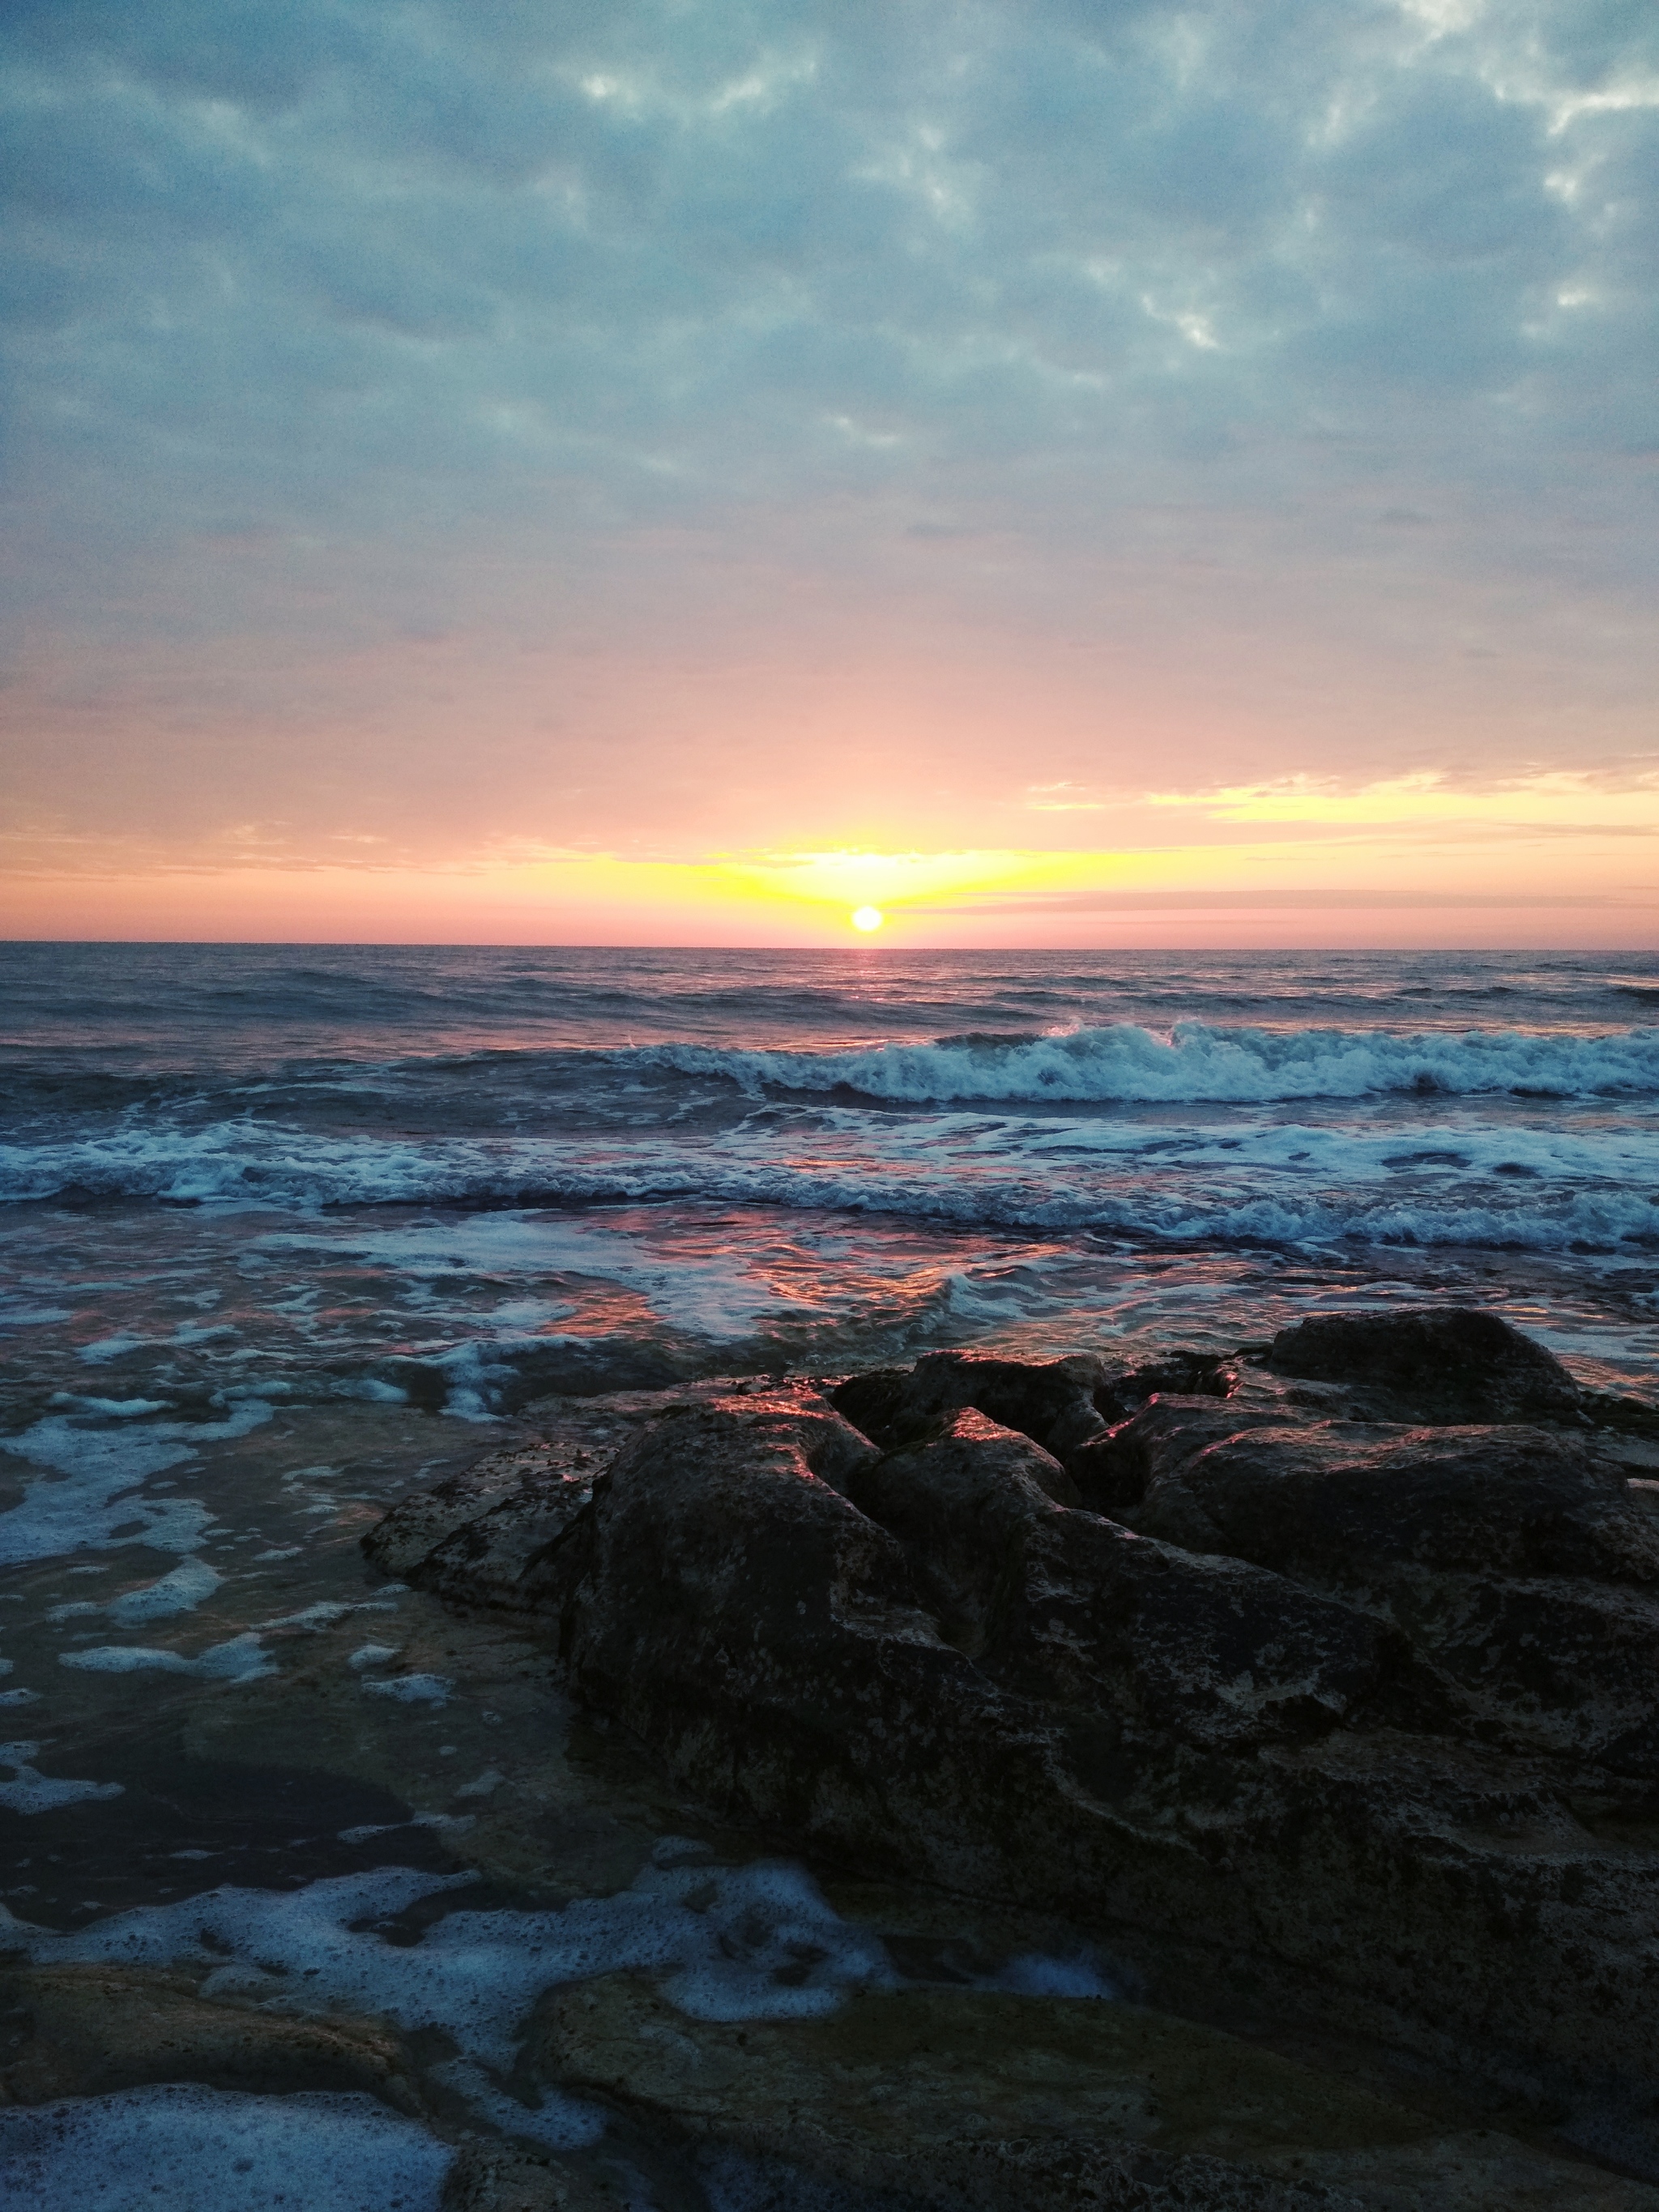 Dawn on the Caspian Sea 2.0 - My, Caspian Sea, dawn, Mobile photography, Beautiful view, Longpost